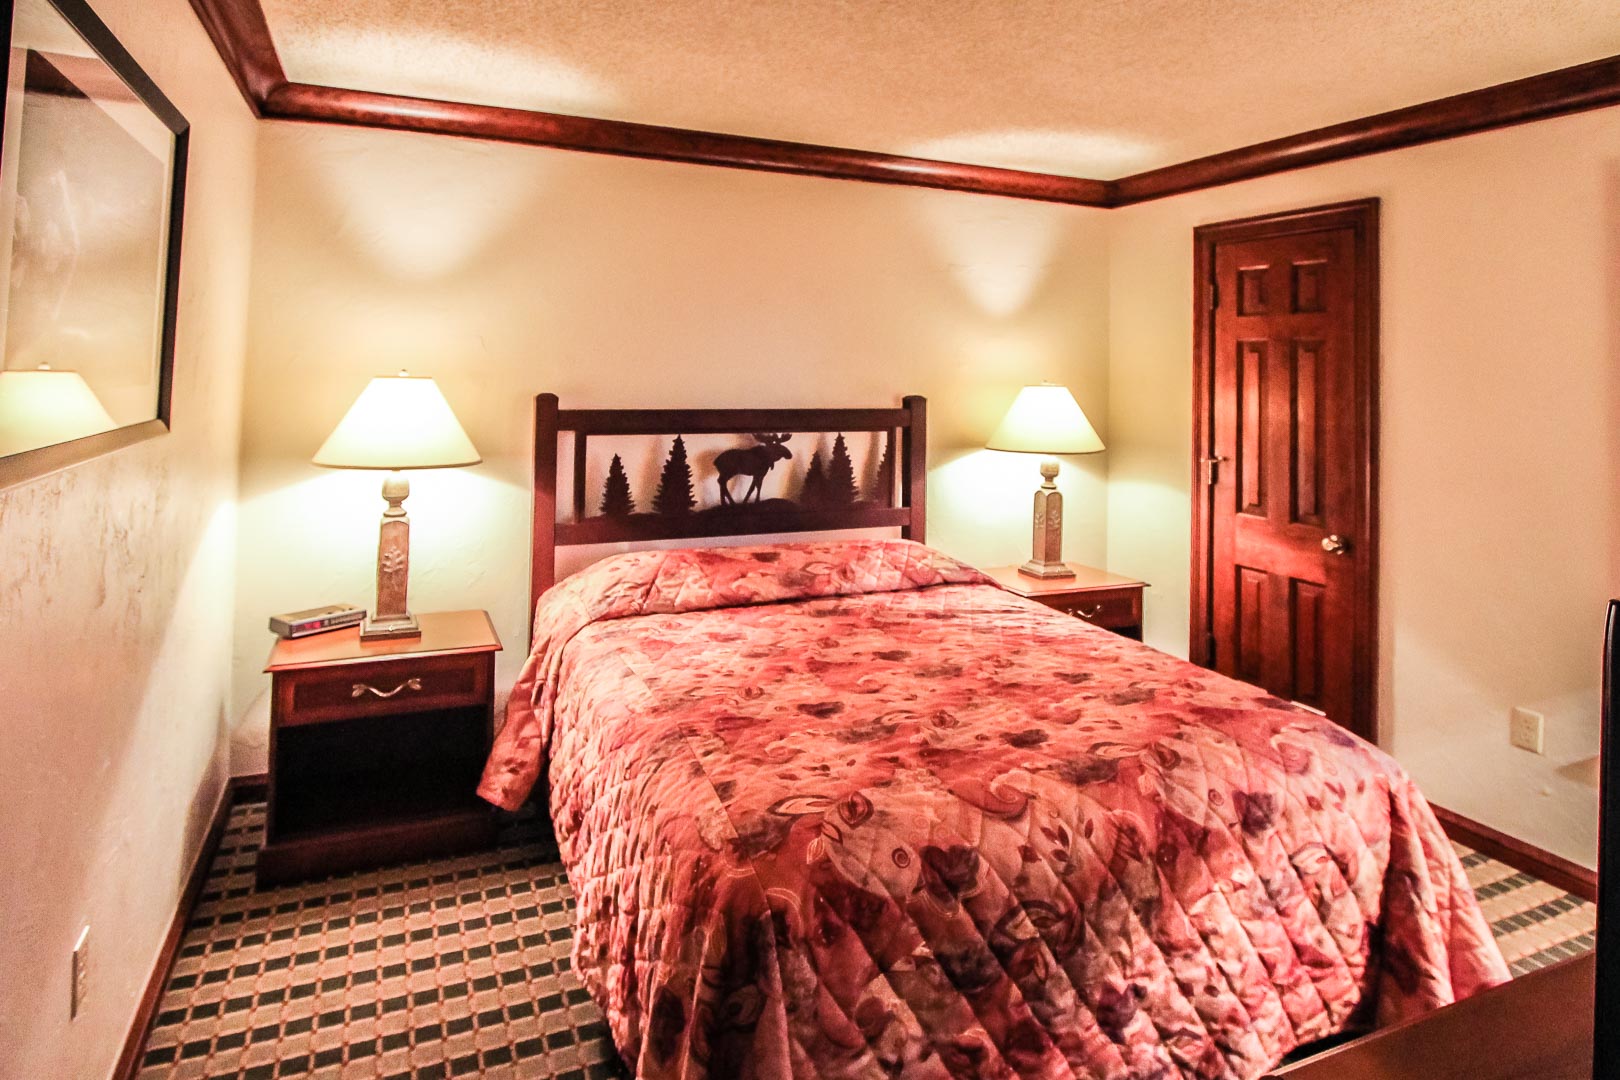 A spacious master bedroom at VRI's Sunburst Resort in Steamboat Springs, Colorado.